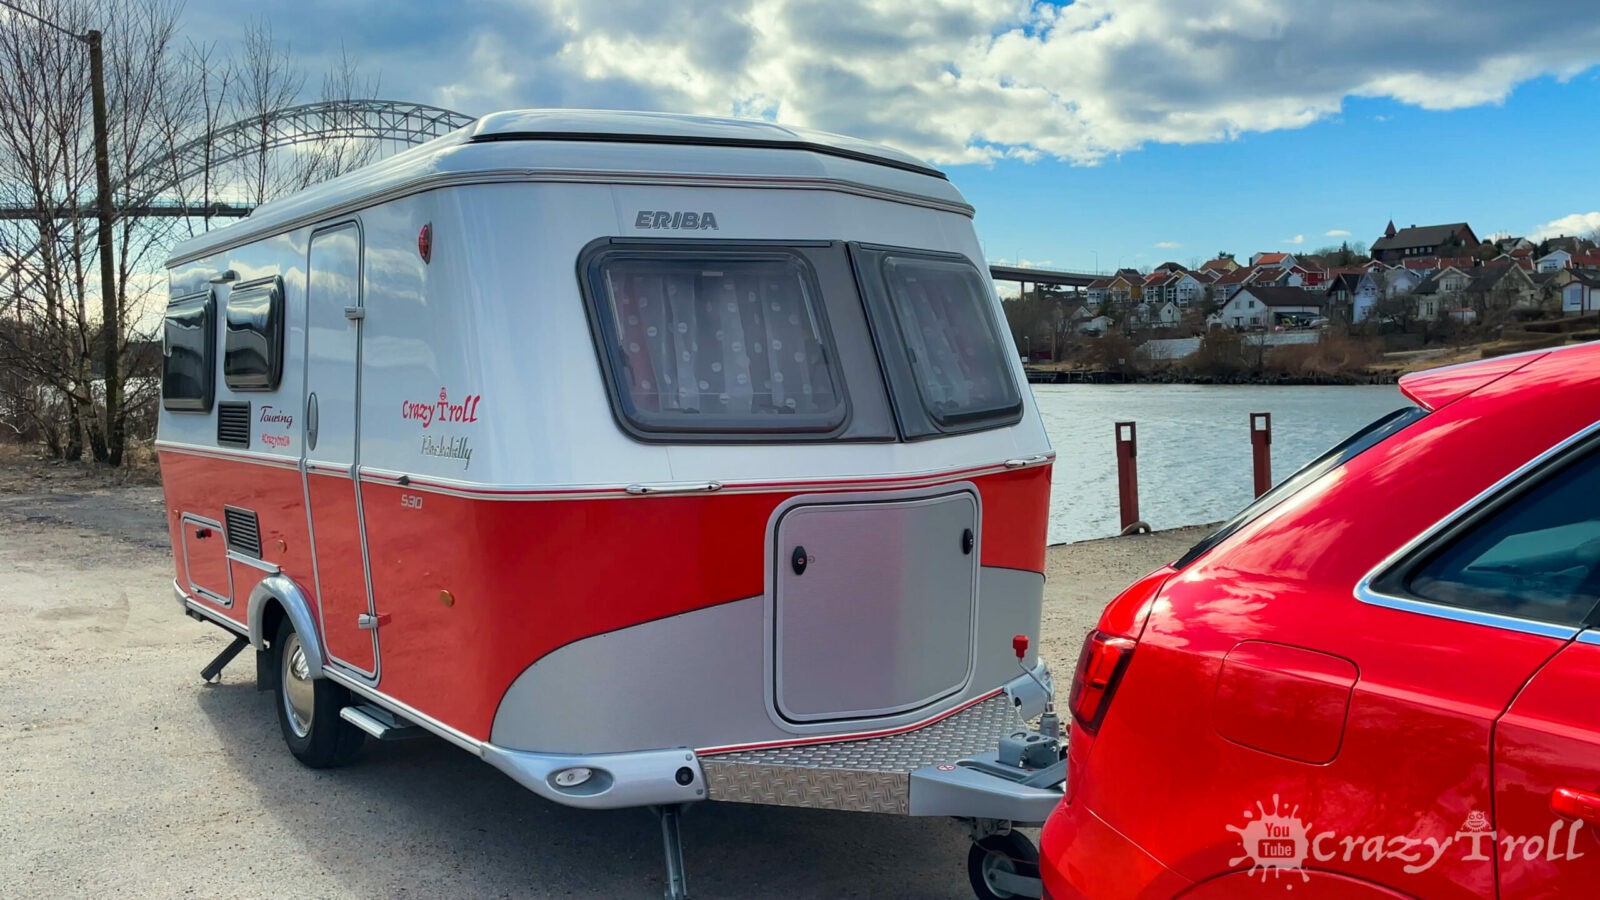 Eriba Touring Troll 530 Rockabilly Caravan Review